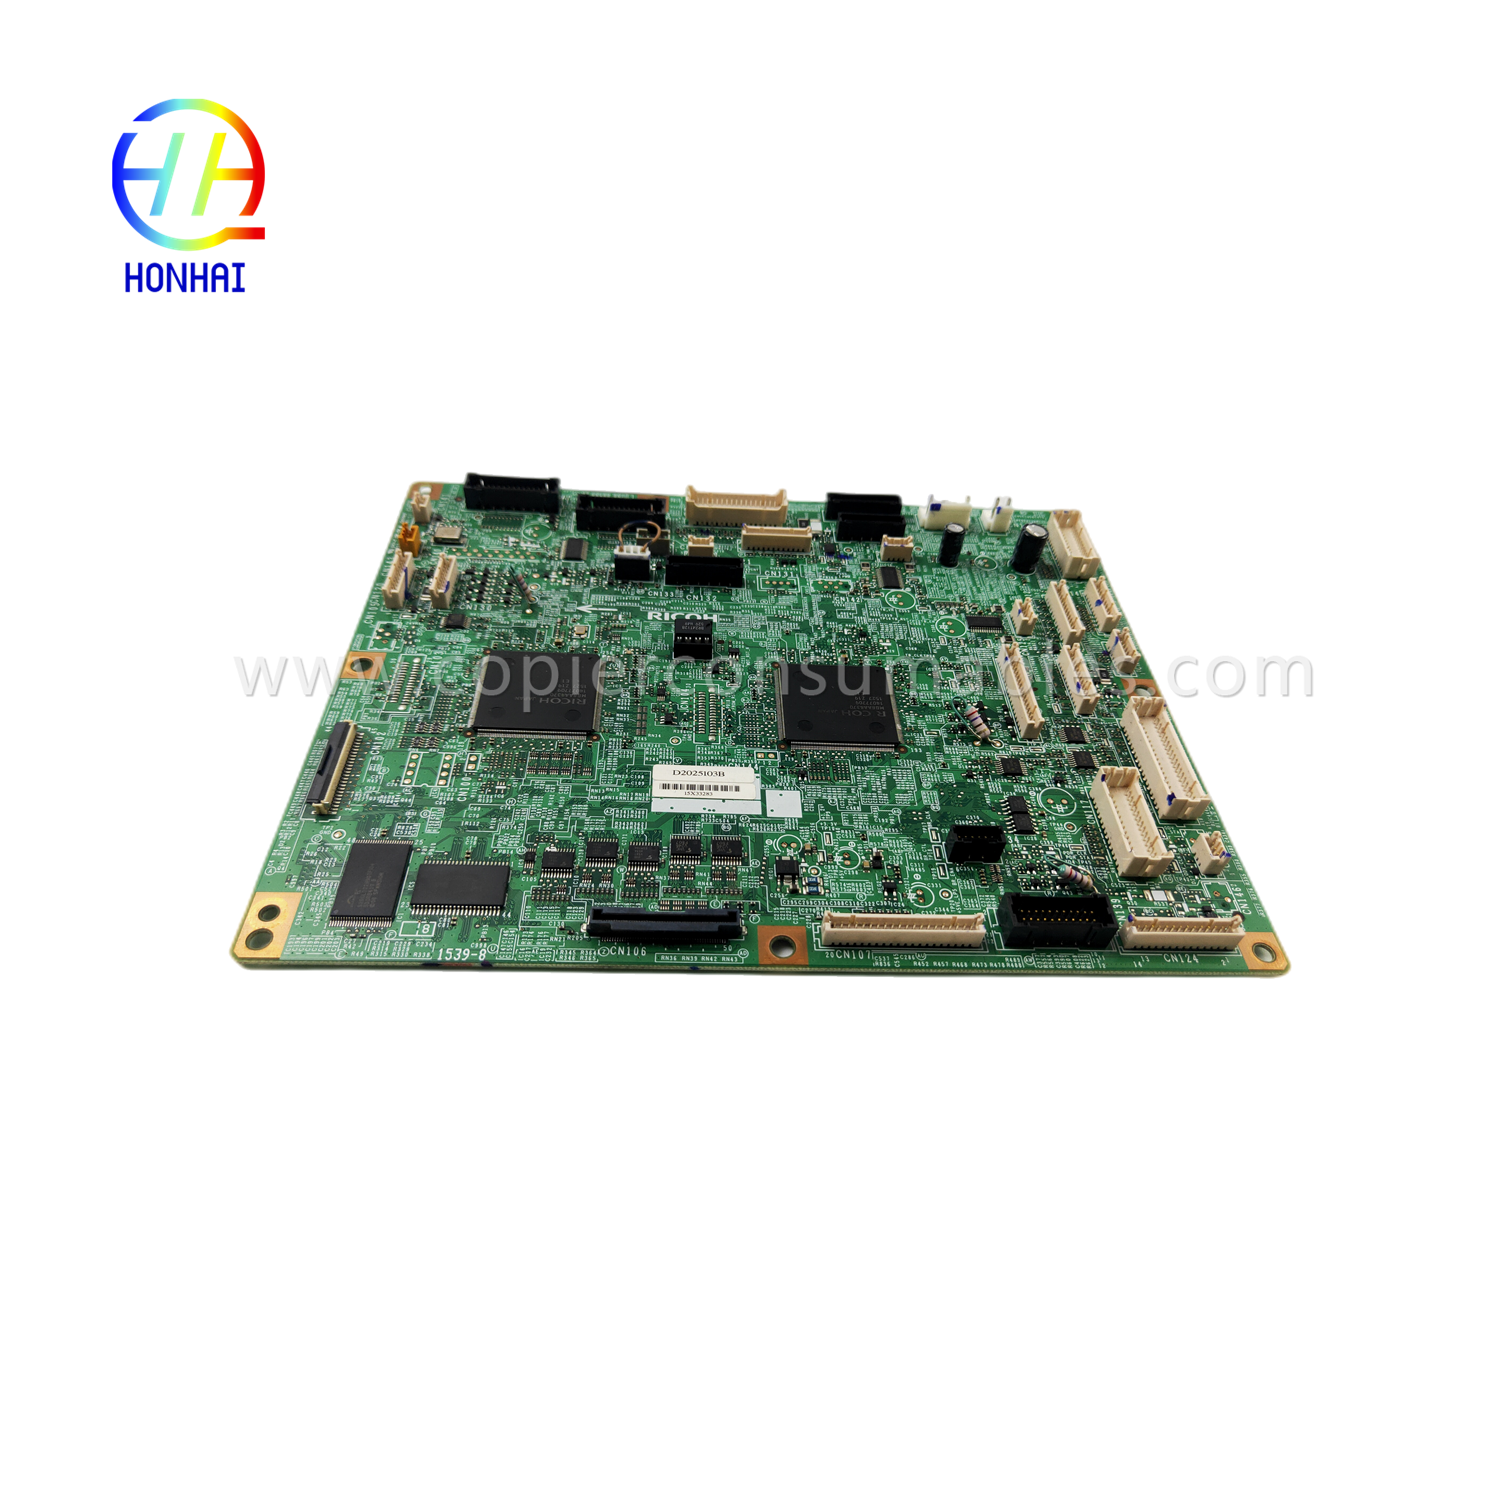 https://c585.goodo.net/bicu-board-for-ricoh-3045-3035-lanier-ld235-ld245-savin-4035-4045-bicu-board-assembly-product/